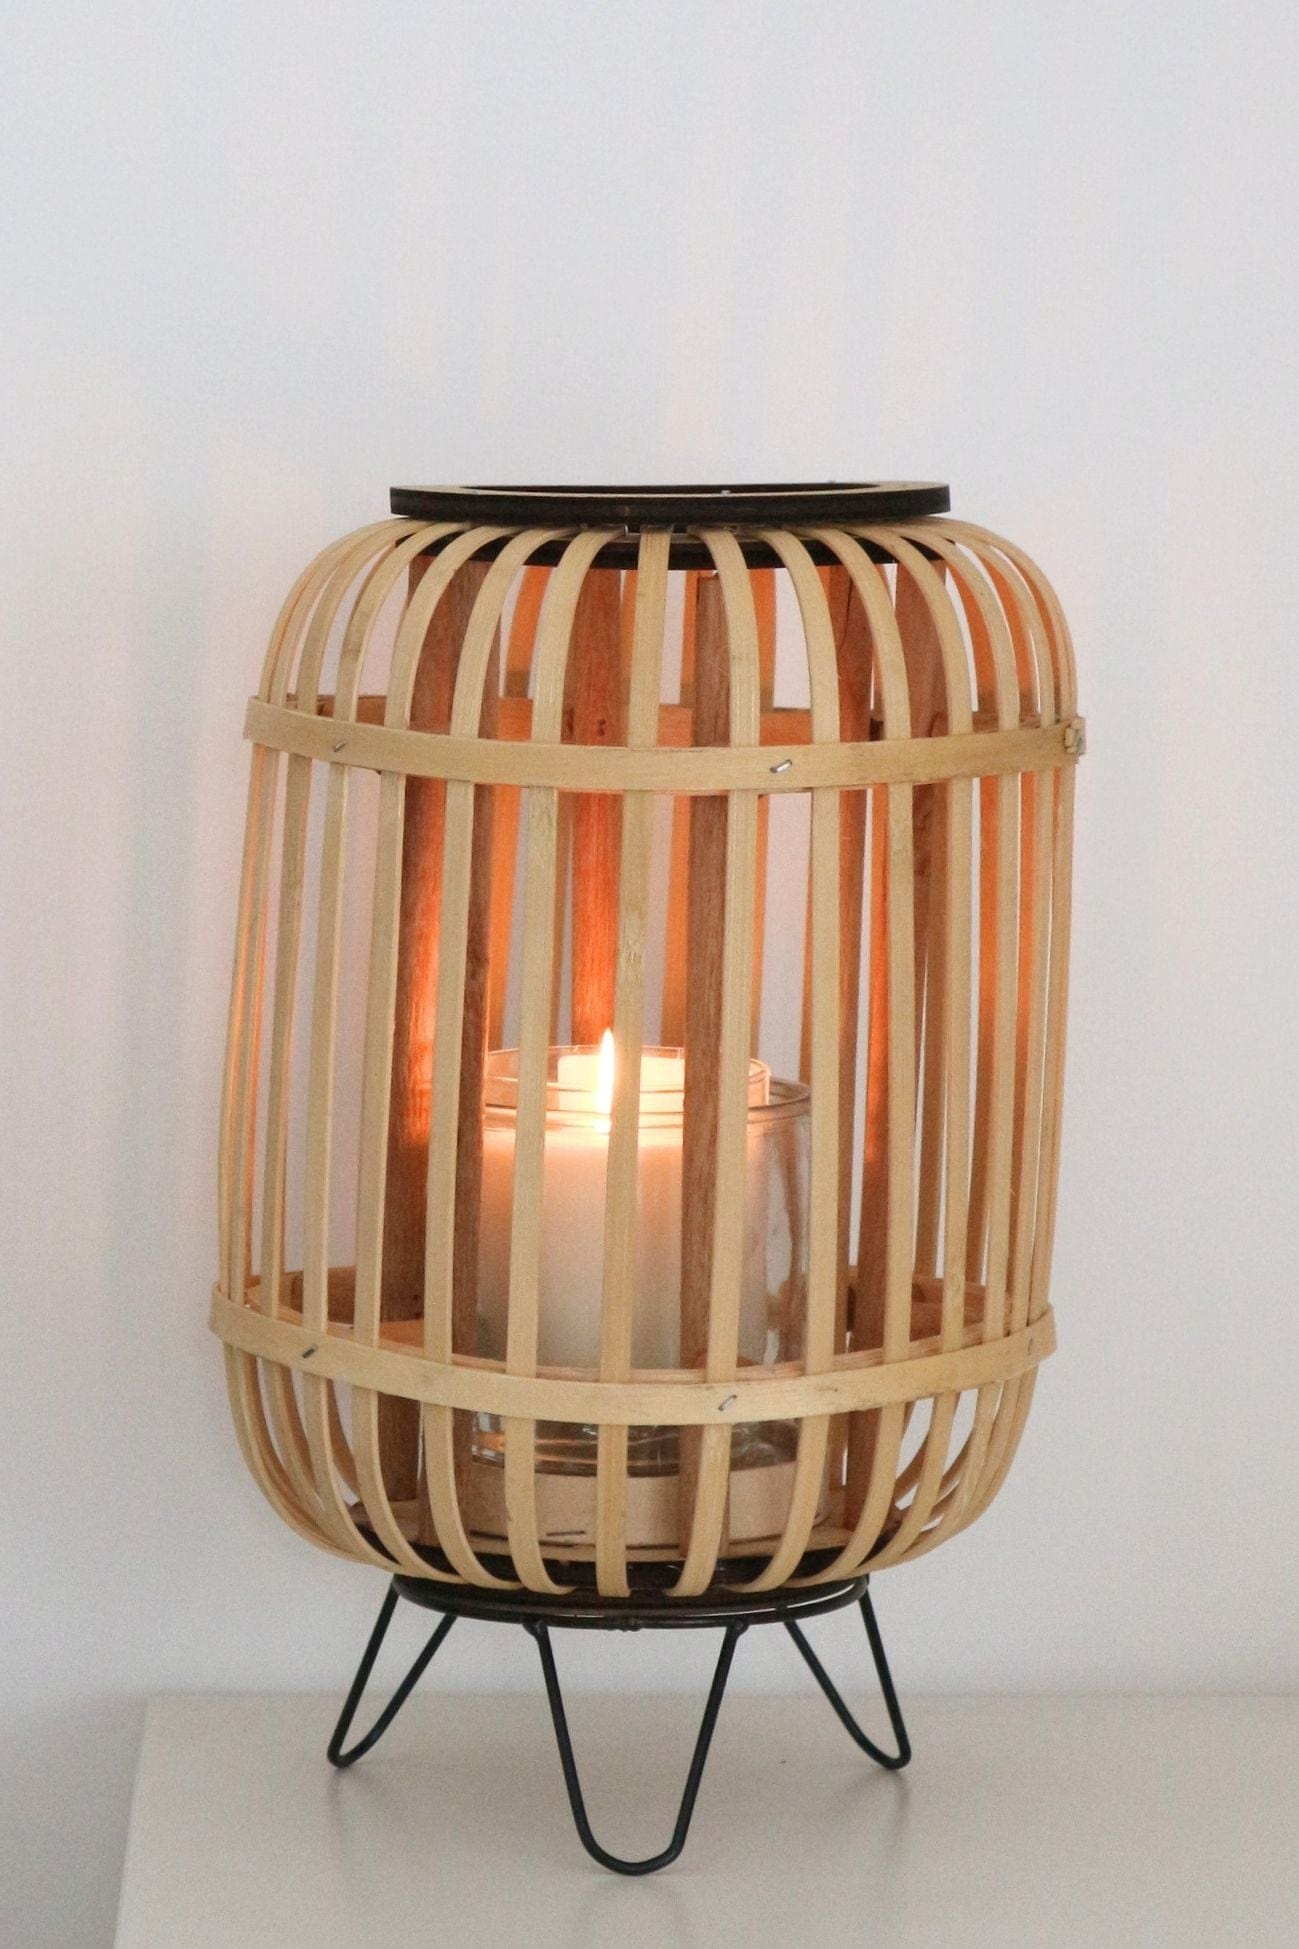 Item International Glaneur Glaneur - Lanterna in bambù e metallo | Item International